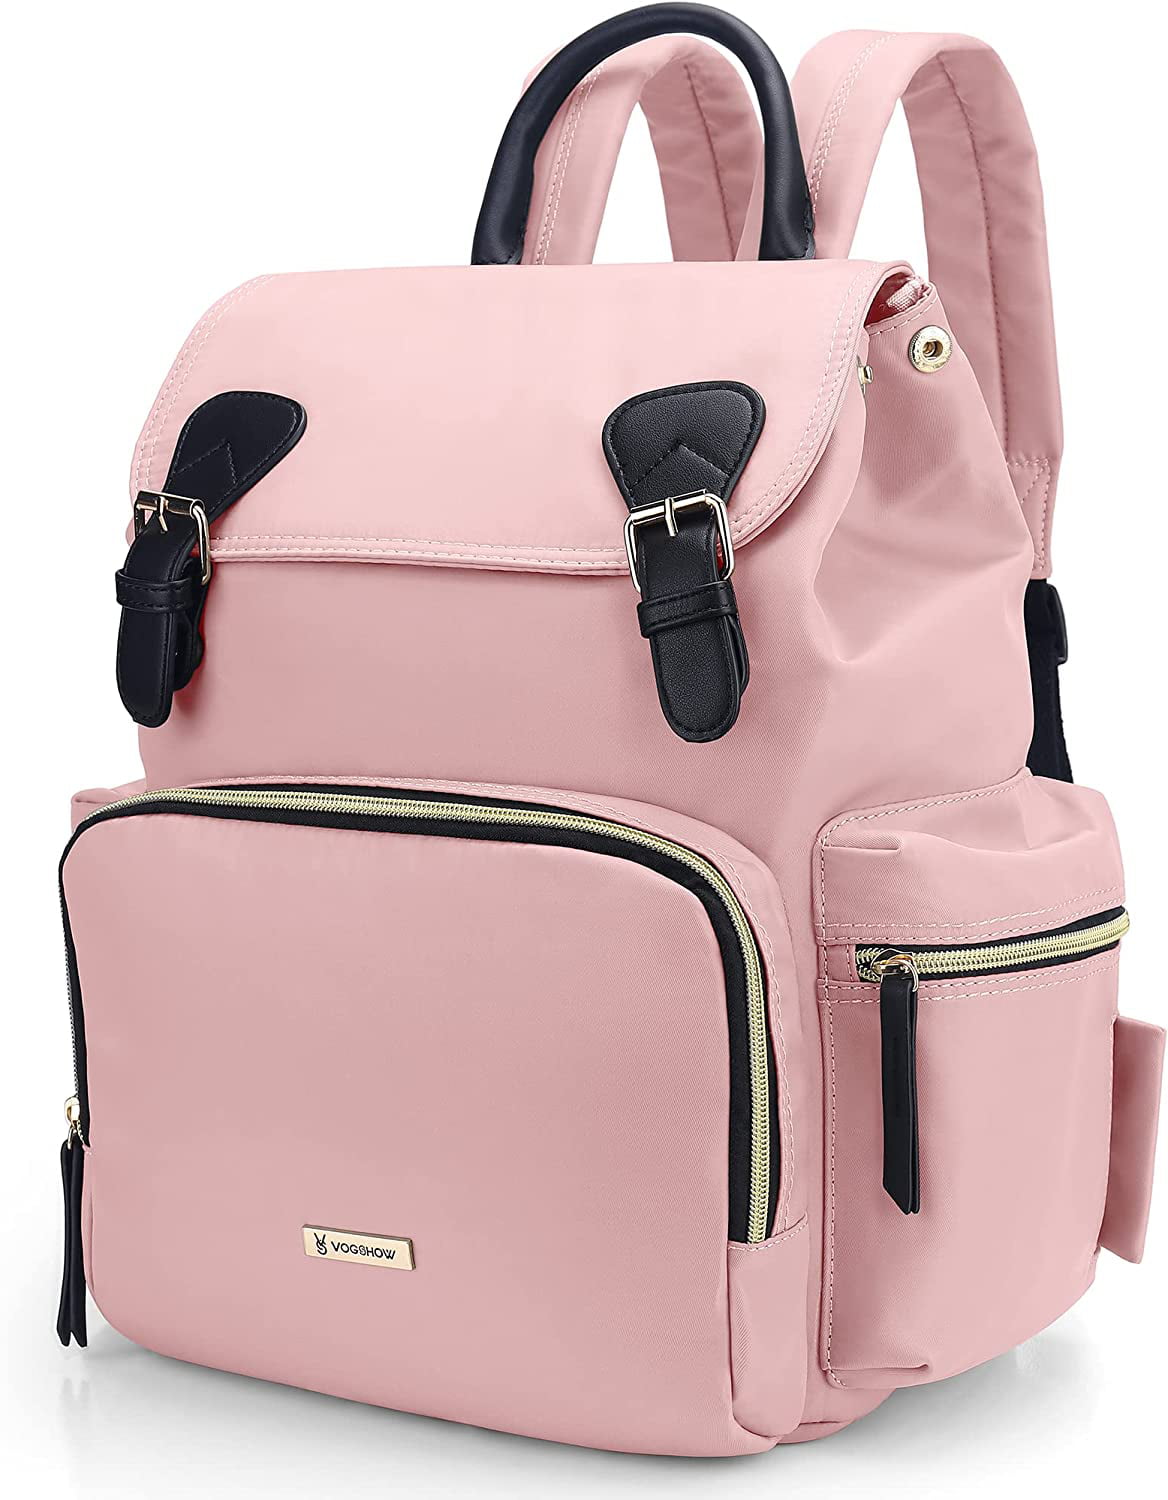 Diaper Bag Backpack, Highwell Jacquard Stylish Travel Baby Bag